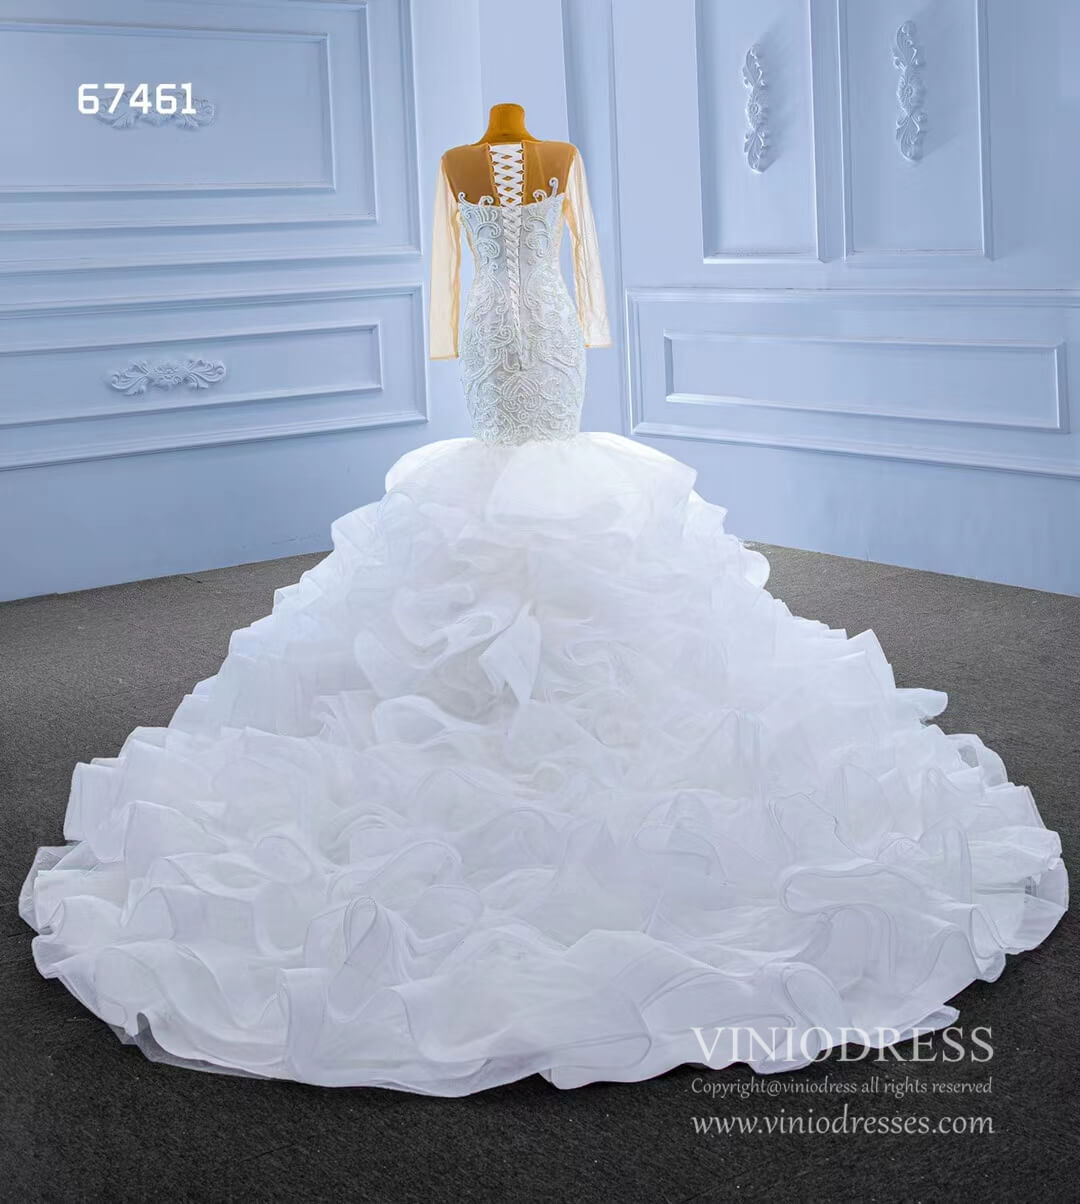 Luxury Mermaid Ruffle Wedding Dresses Long Sleeves 67461-wedding dresses-Viniodress-Viniodress